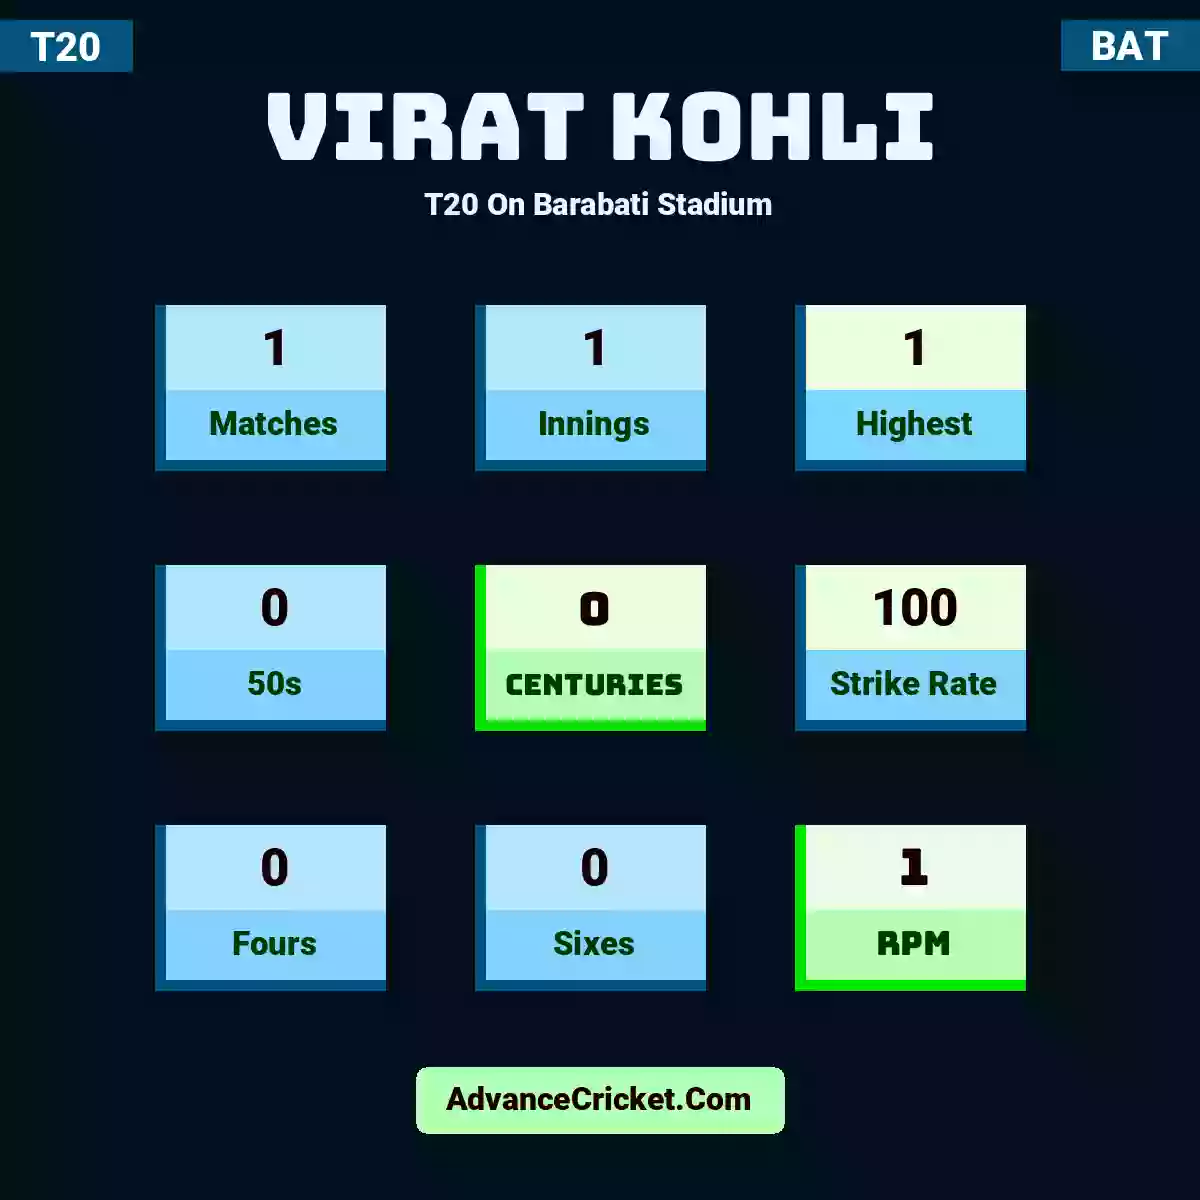 Virat Kohli T20  On Barabati Stadium, Virat Kohli played 1 matches, scored 1 runs as highest, 0 half-centuries, and 0 centuries, with a strike rate of 100. V.Kohli hit 0 fours and 0 sixes, with an RPM of 1.